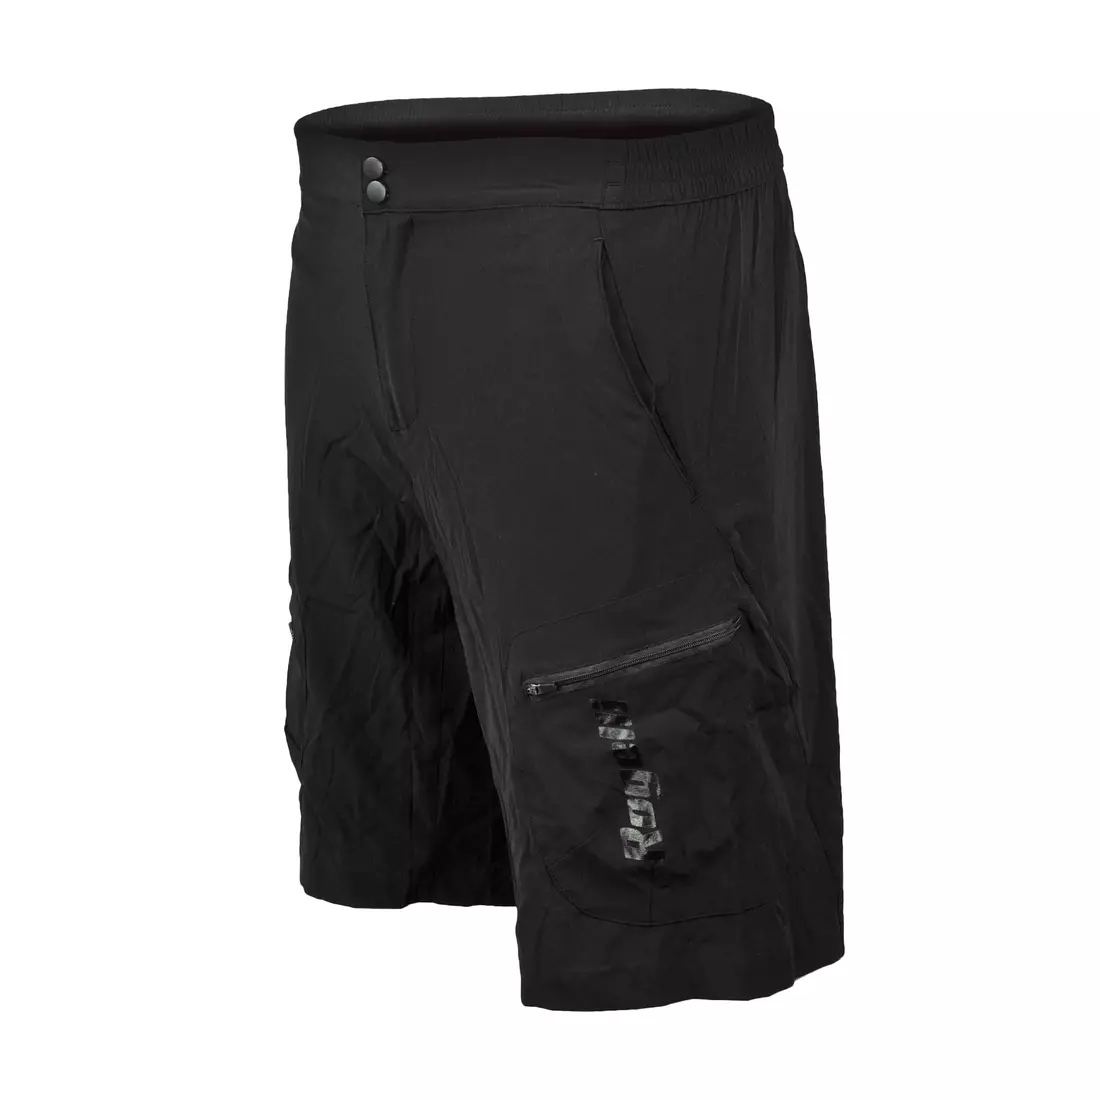 ROGELLI BIKE NAVELLI - men's MTB shorts